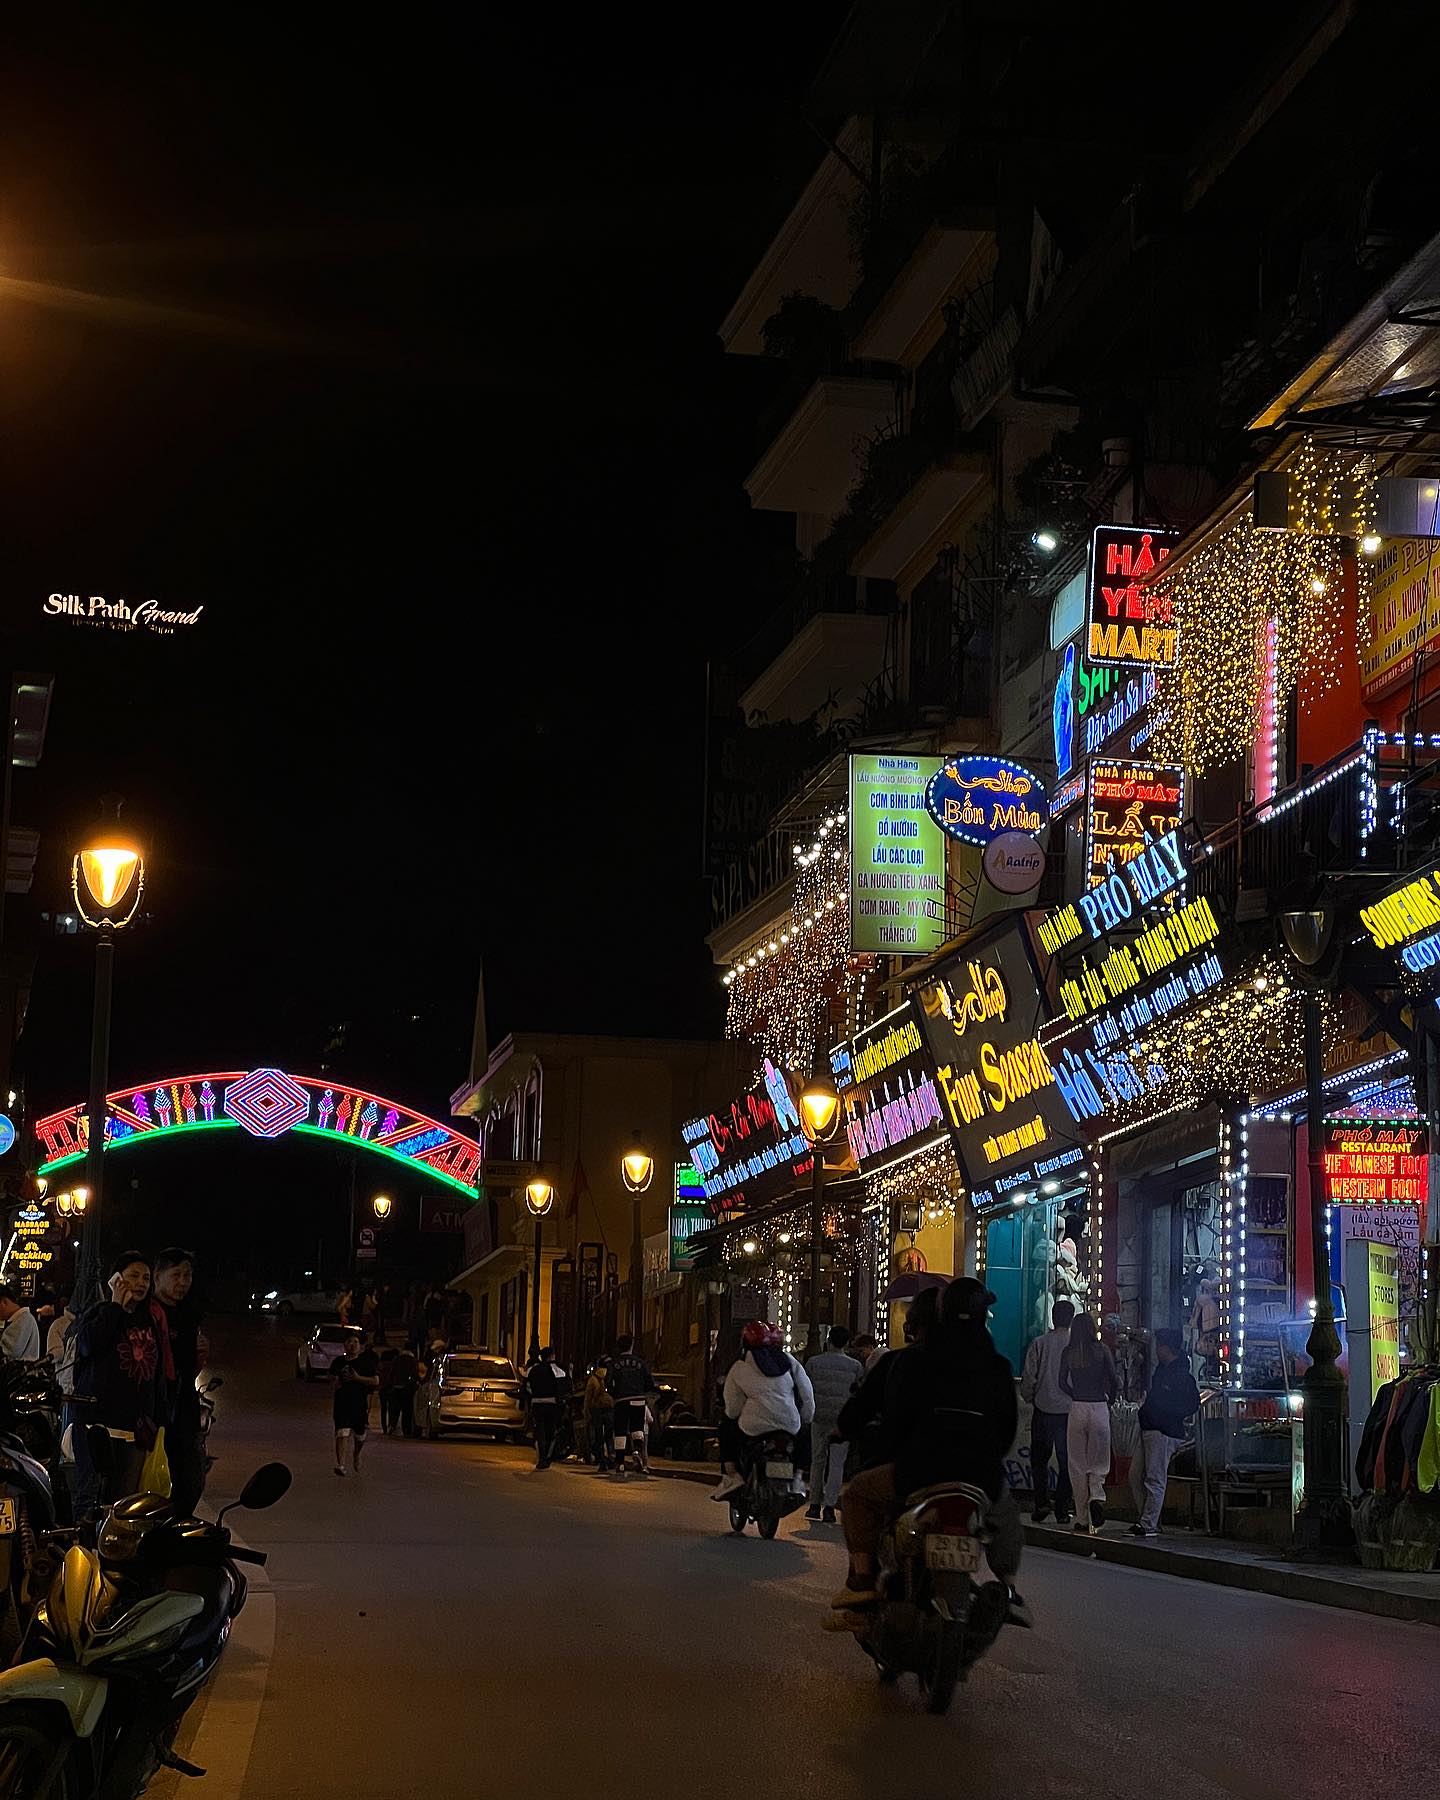 A bit of Vietnam at night 🌙